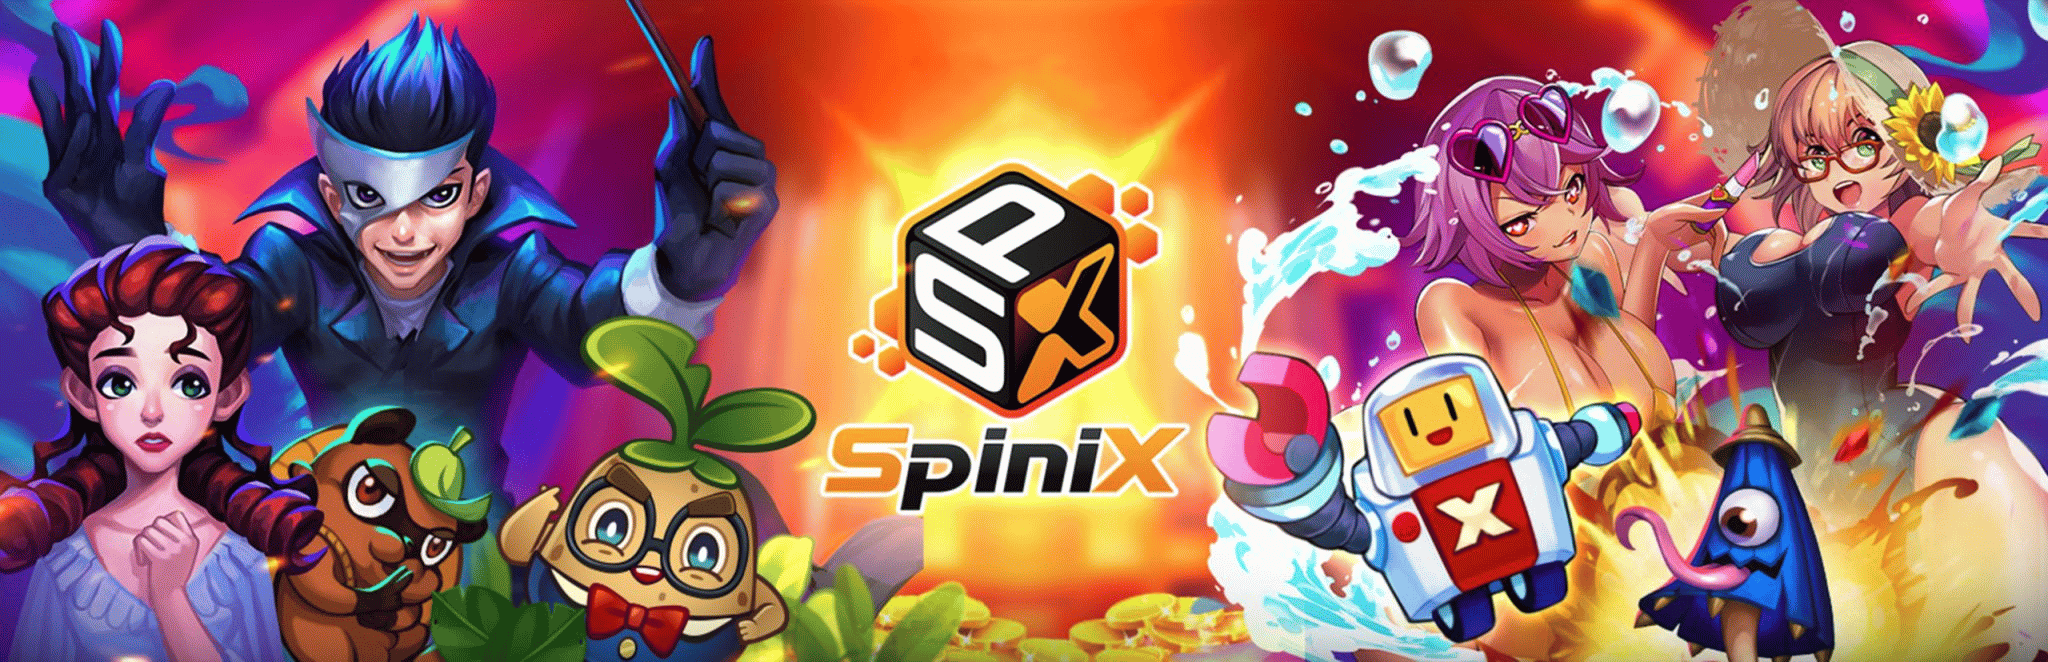 Spinix game